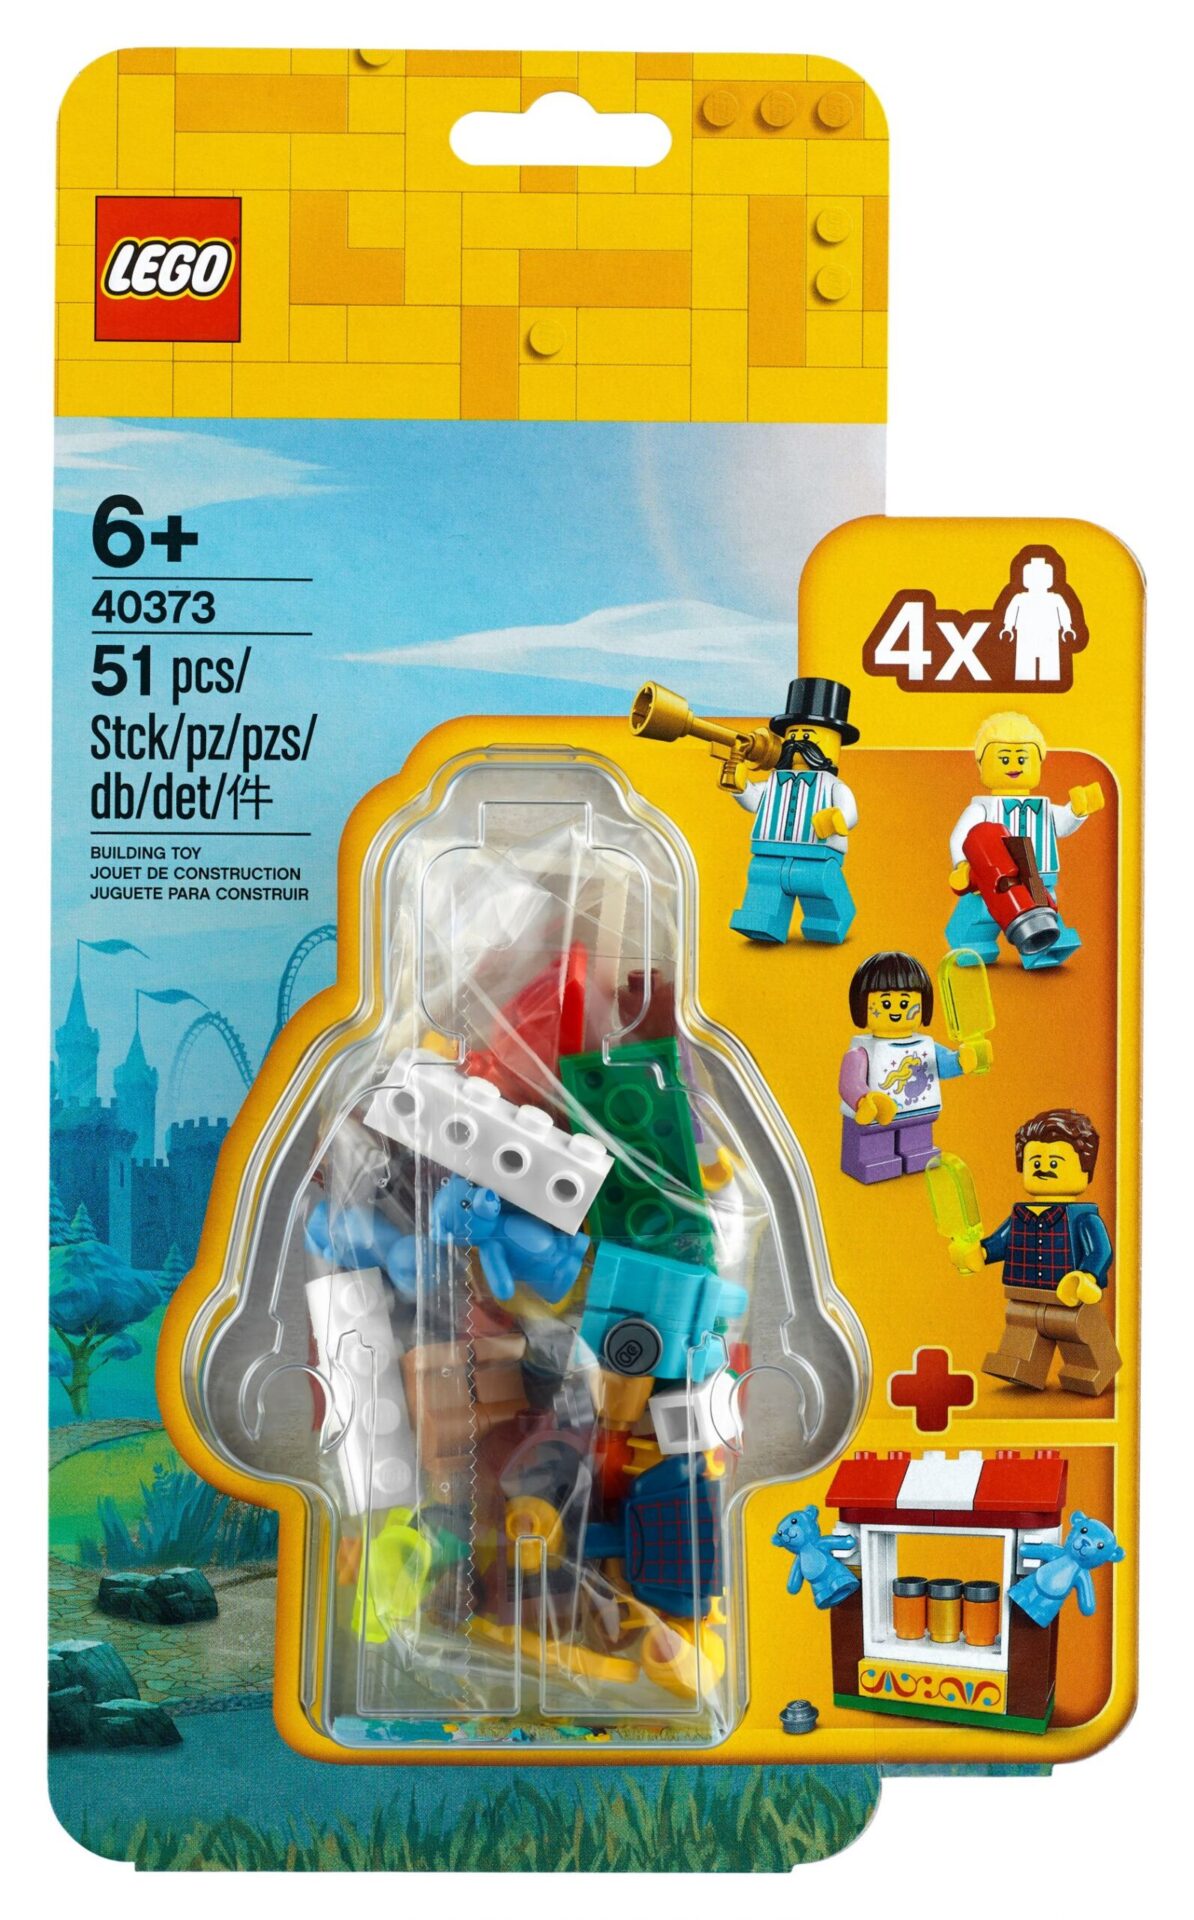 LEGO_40373_alt2